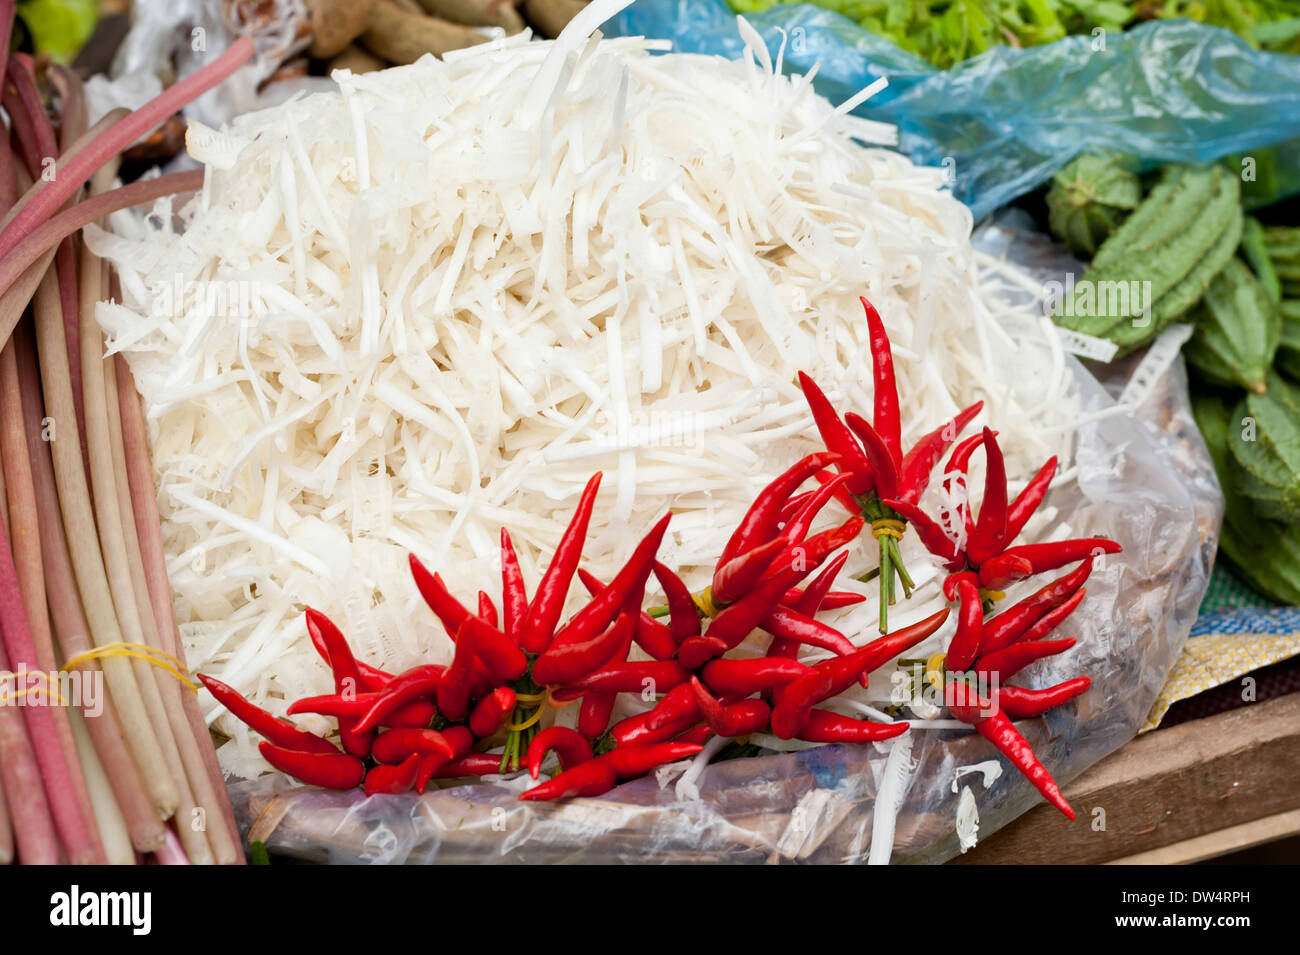 Fresche verdure organiche, erbe e frutti a asian food market Foto Stock